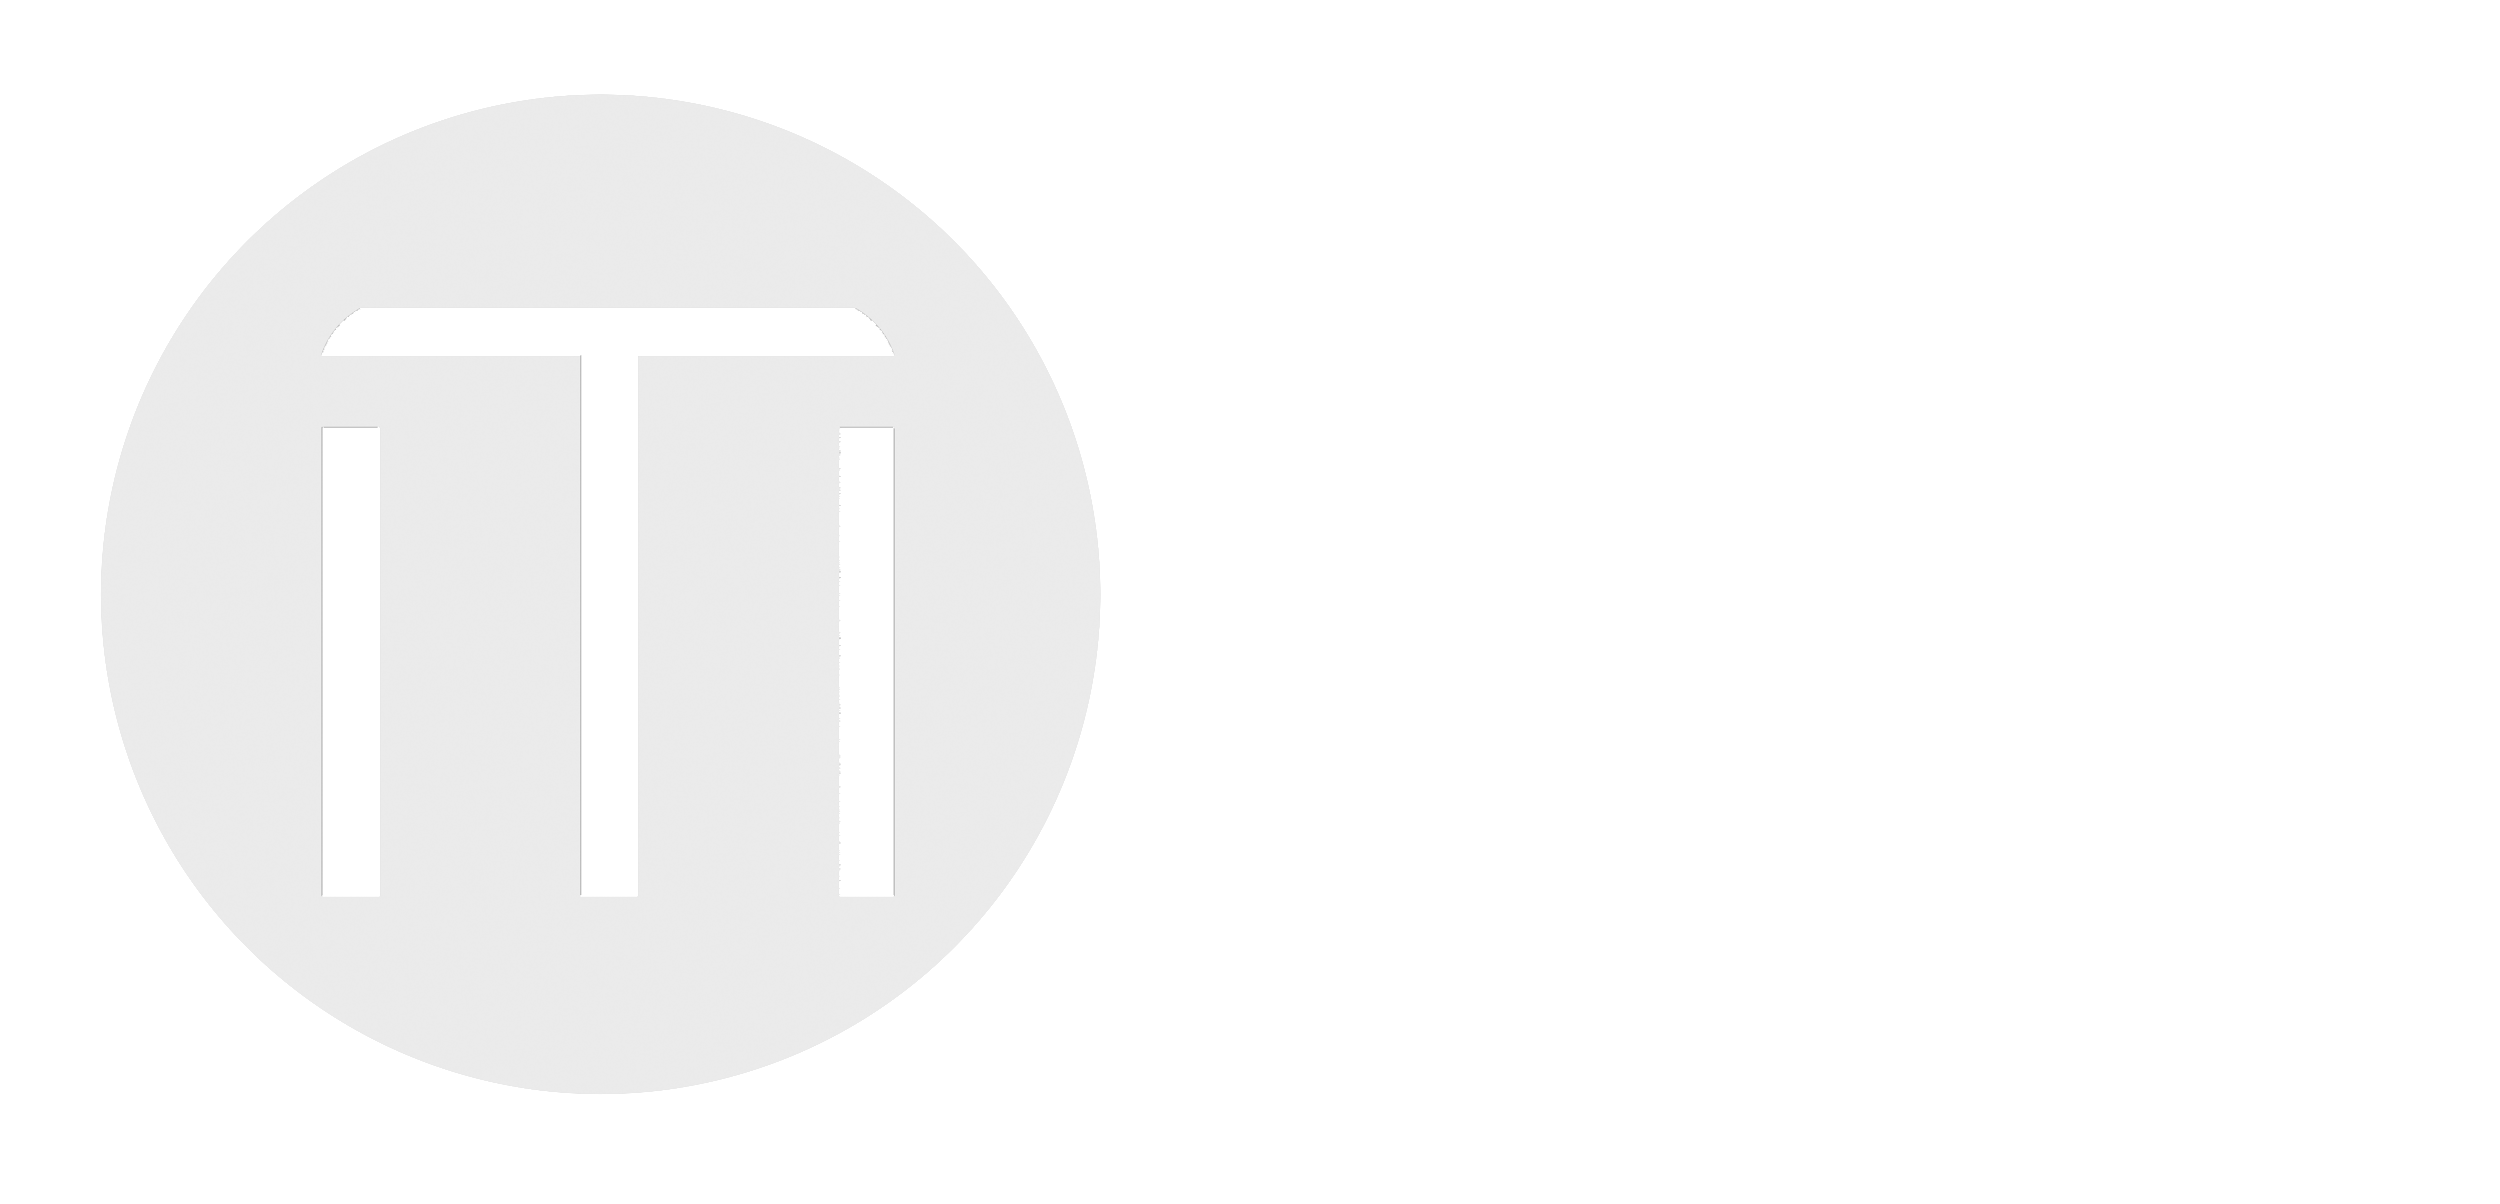 manuel thomé photography